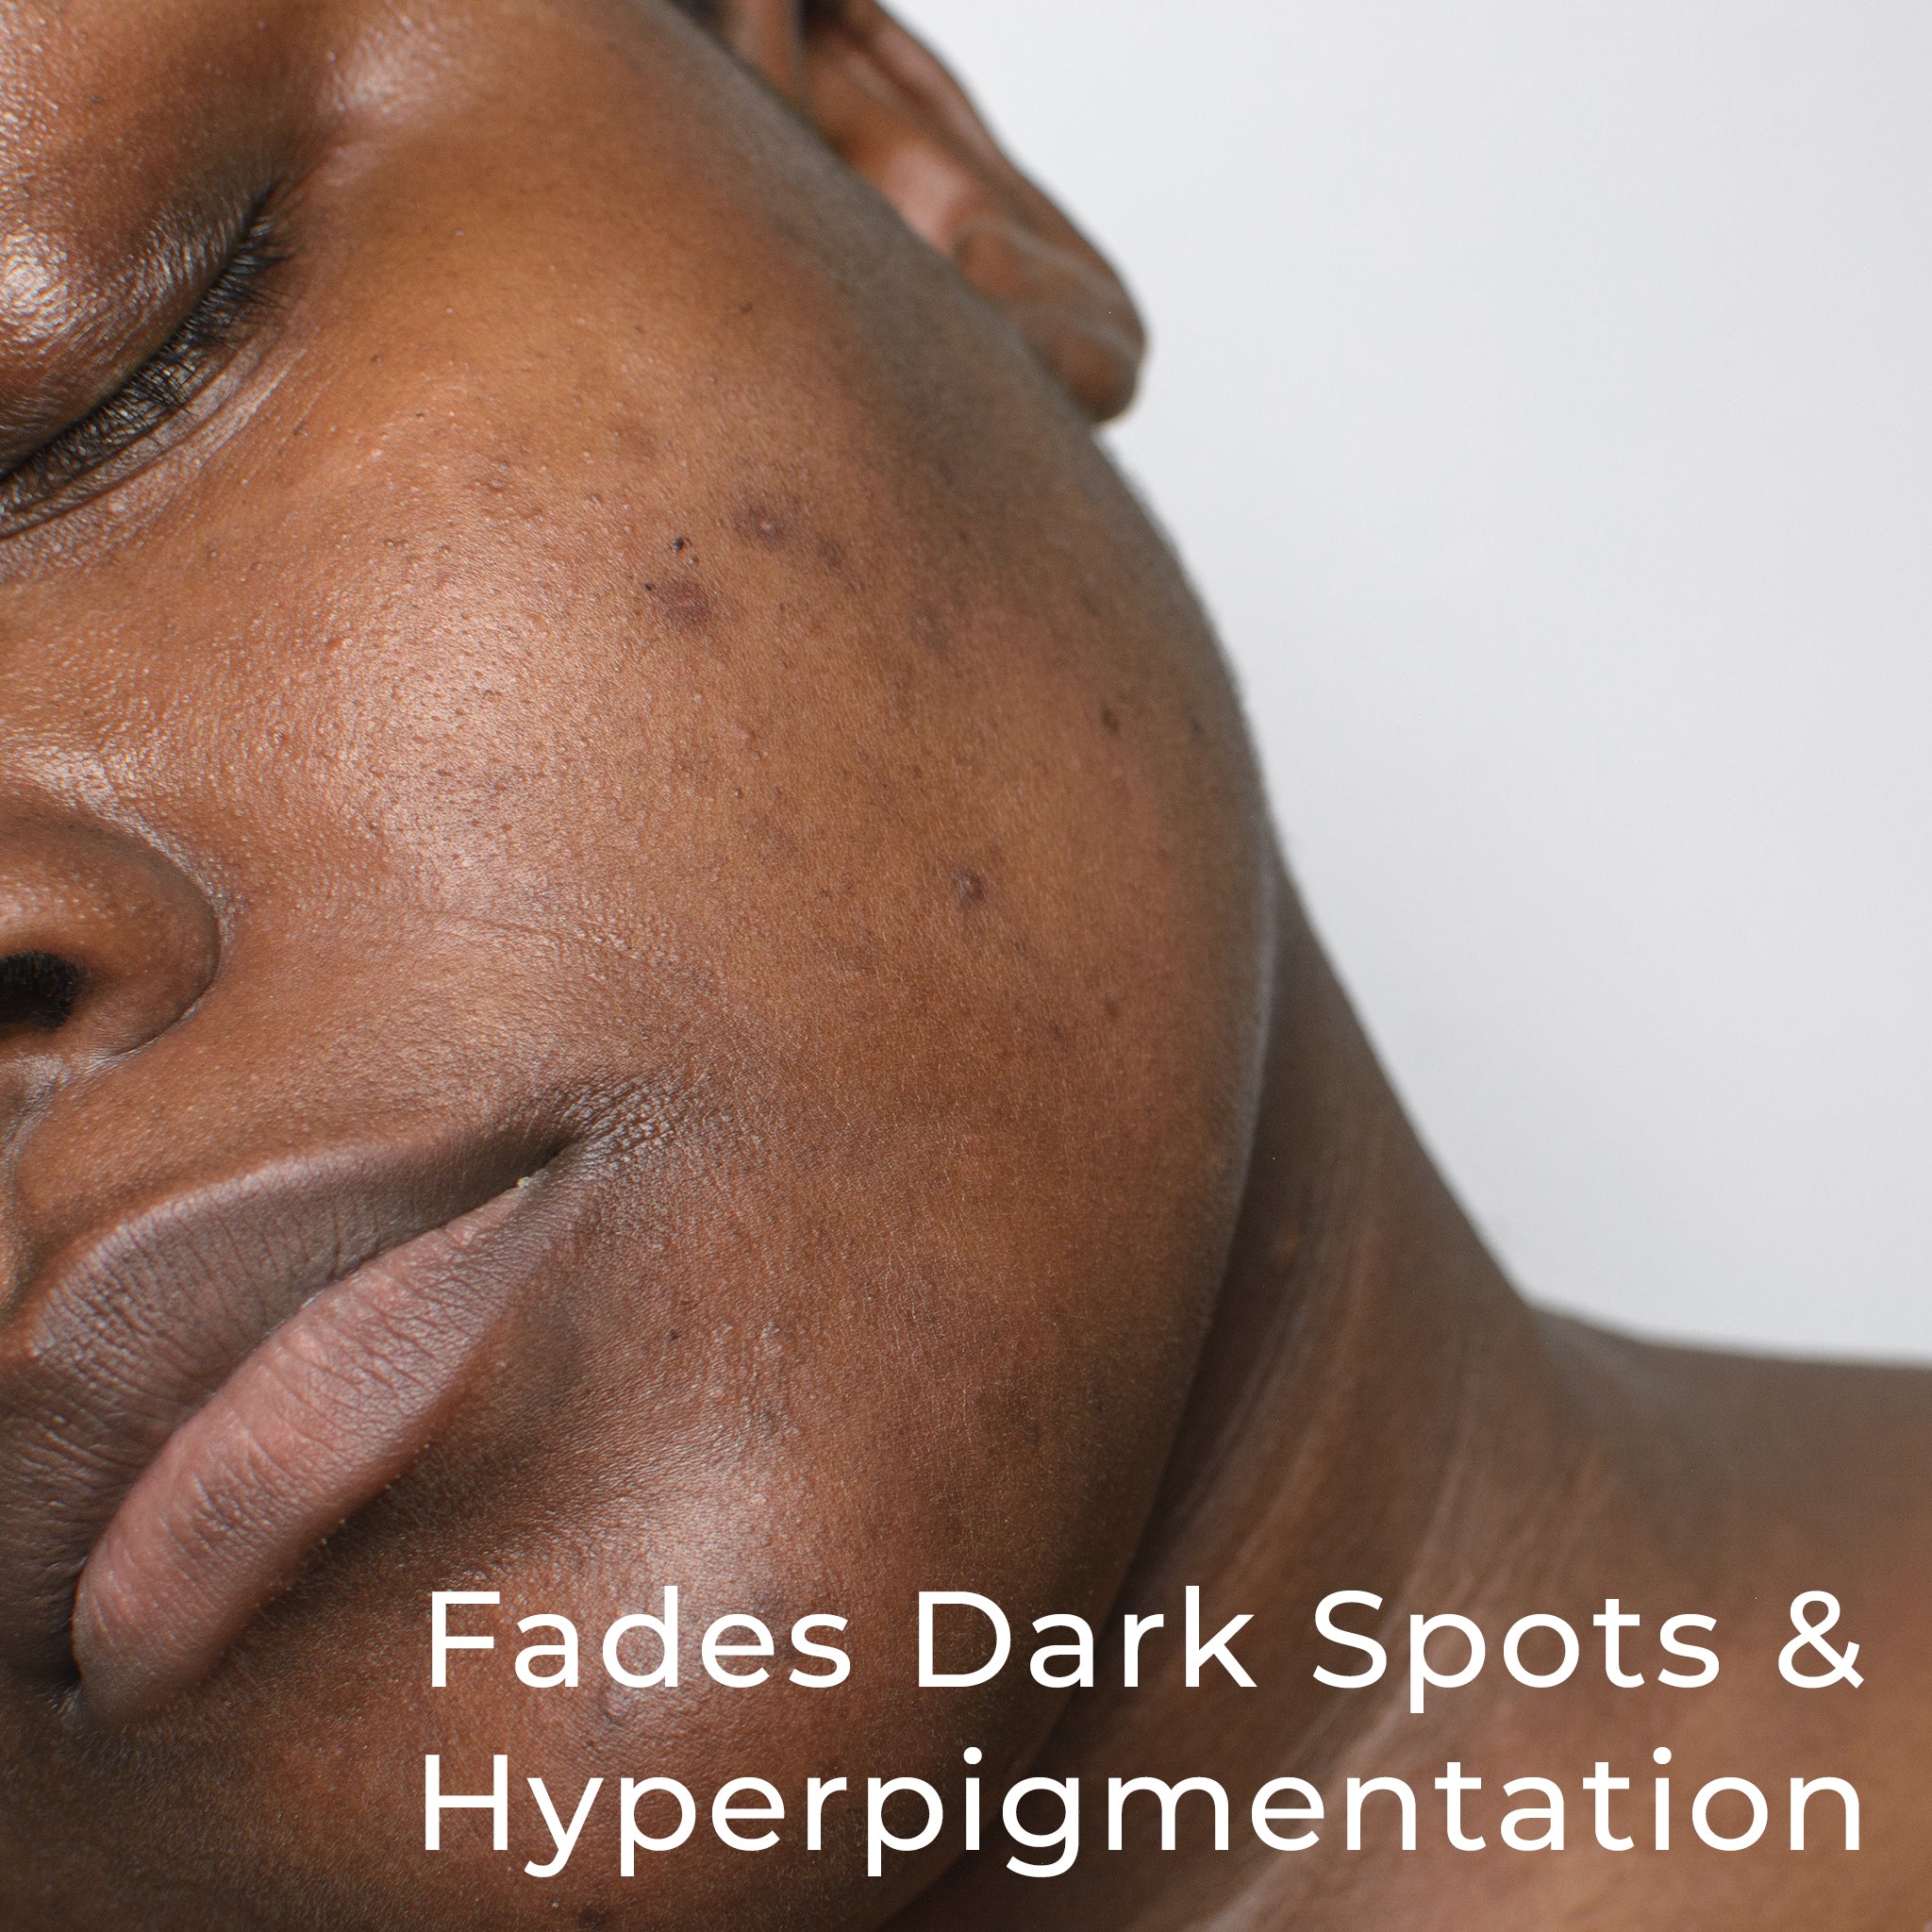 New Turmeric Face Mask Fades Dark Spots and Hyperpigmentation